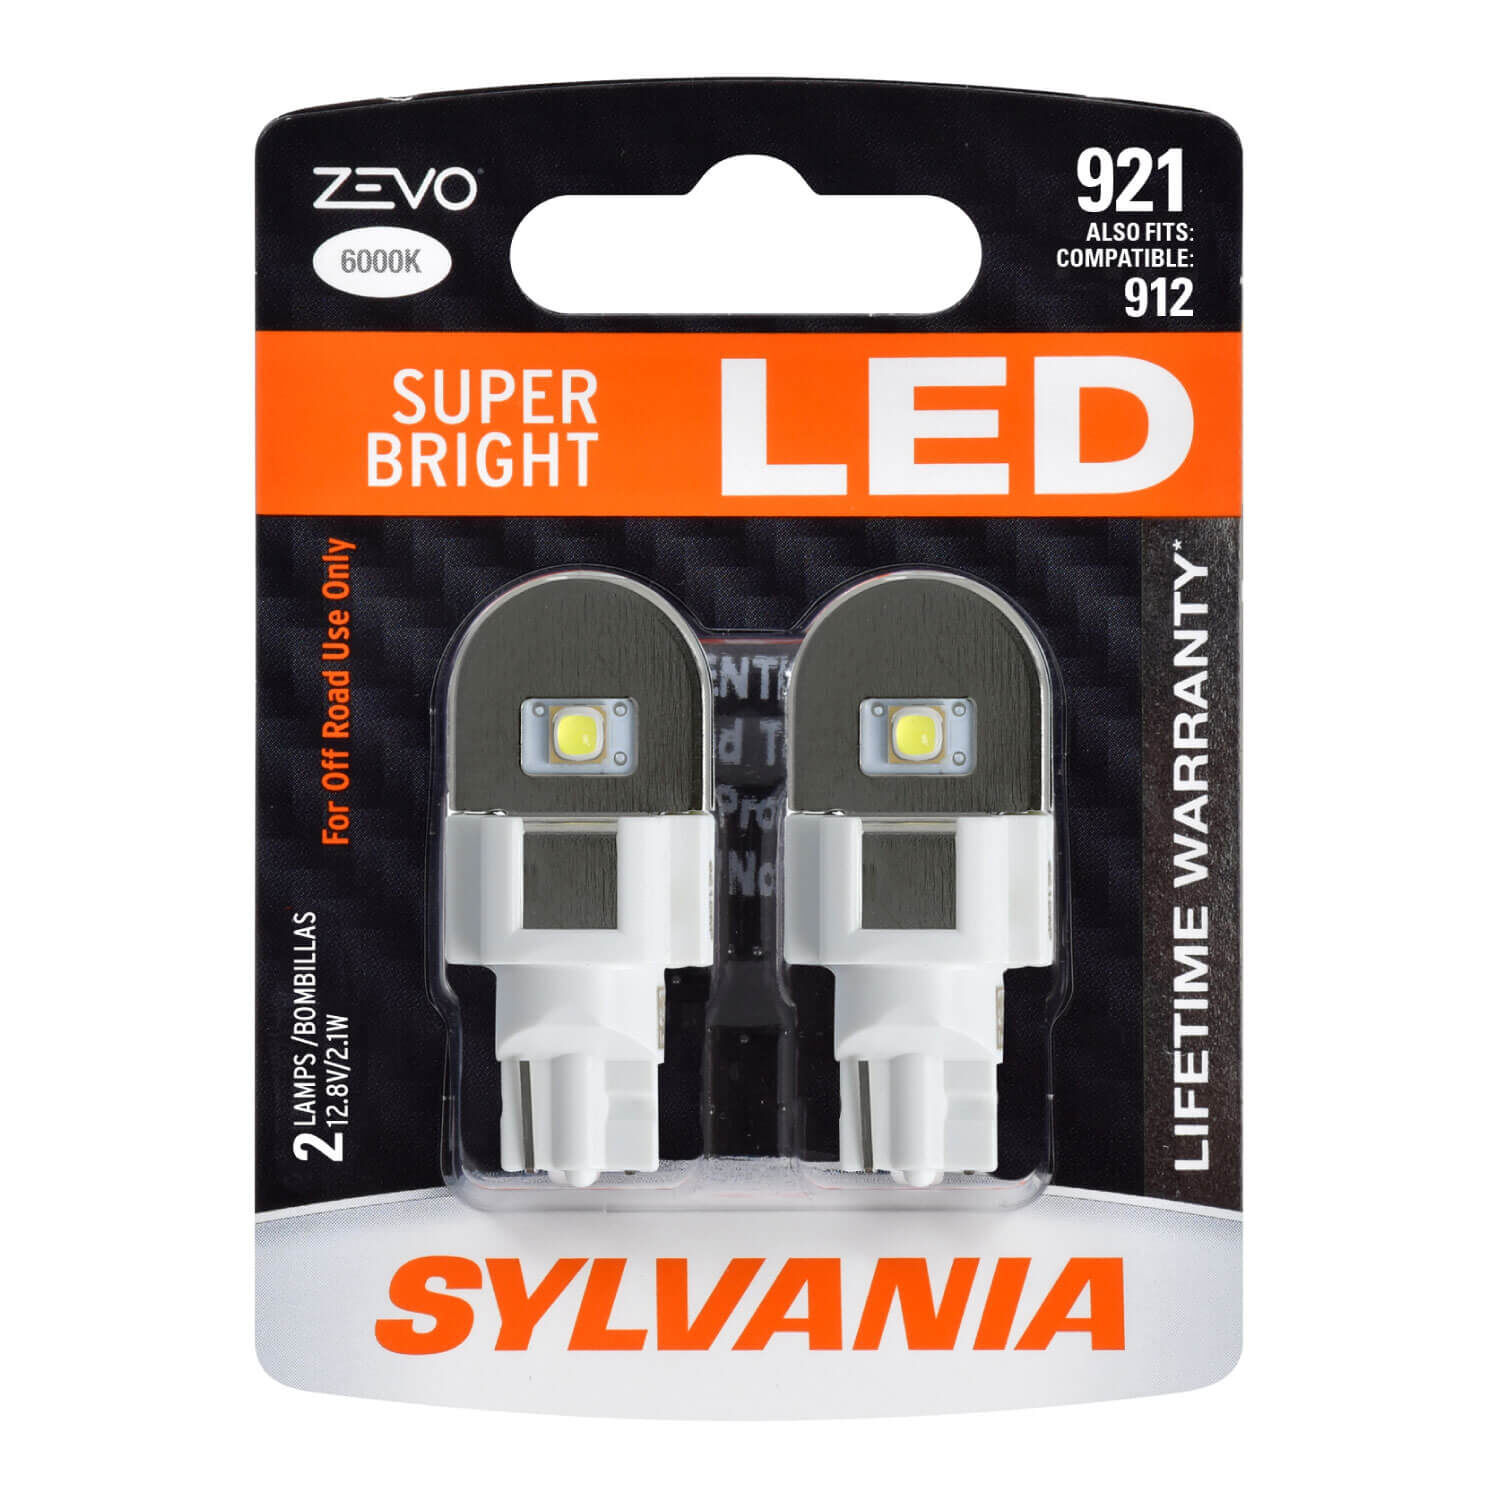 SYLVANIA 921 White LED Bulb, Contains 2 Bulbs 